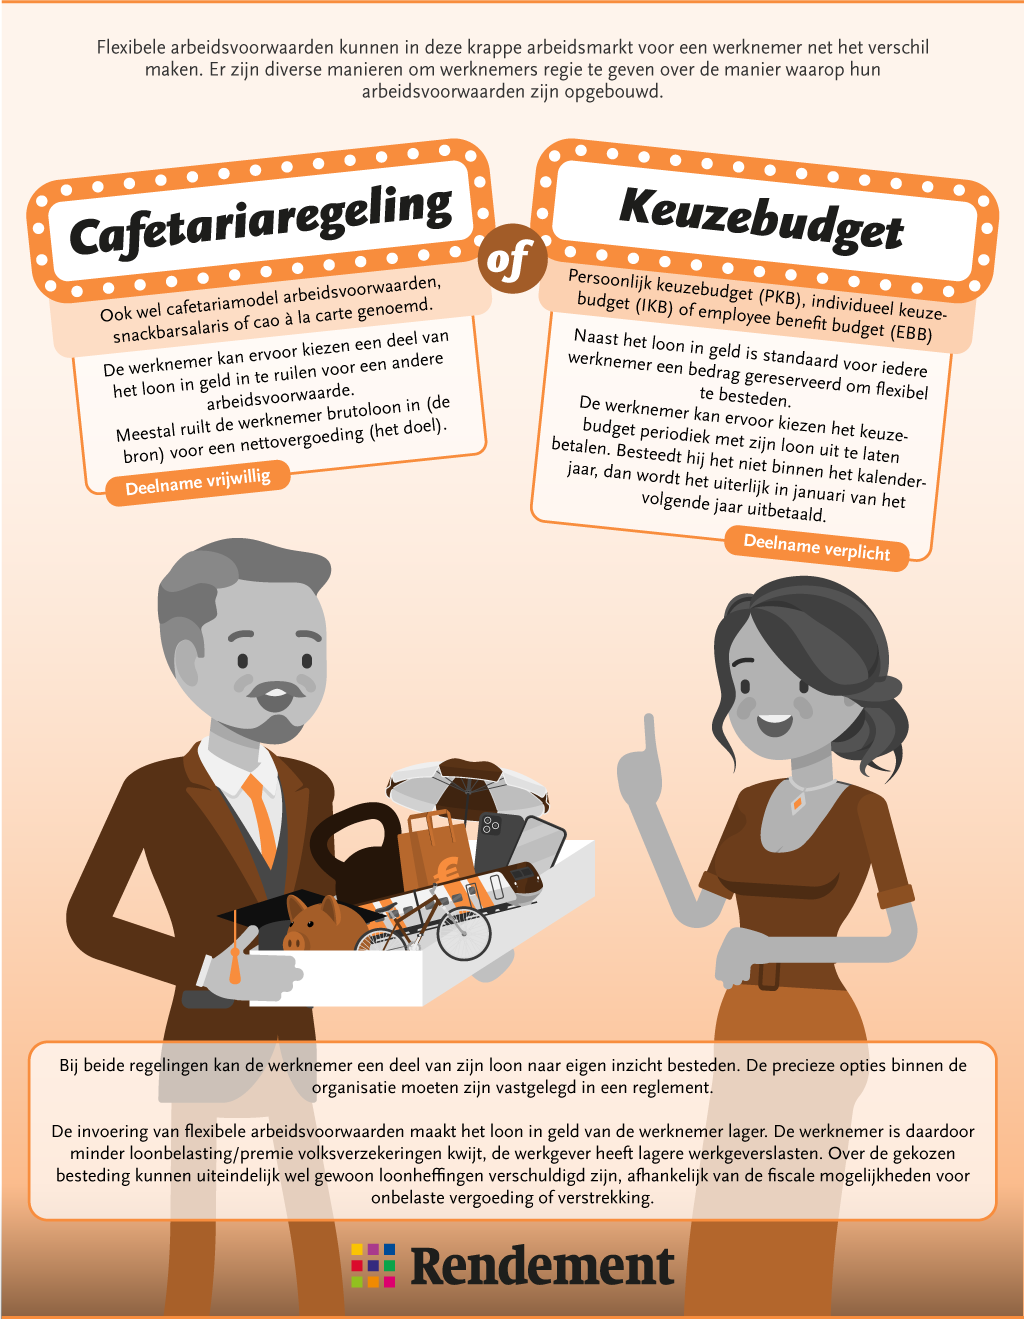 Cafetariaregeling of keuzebudget